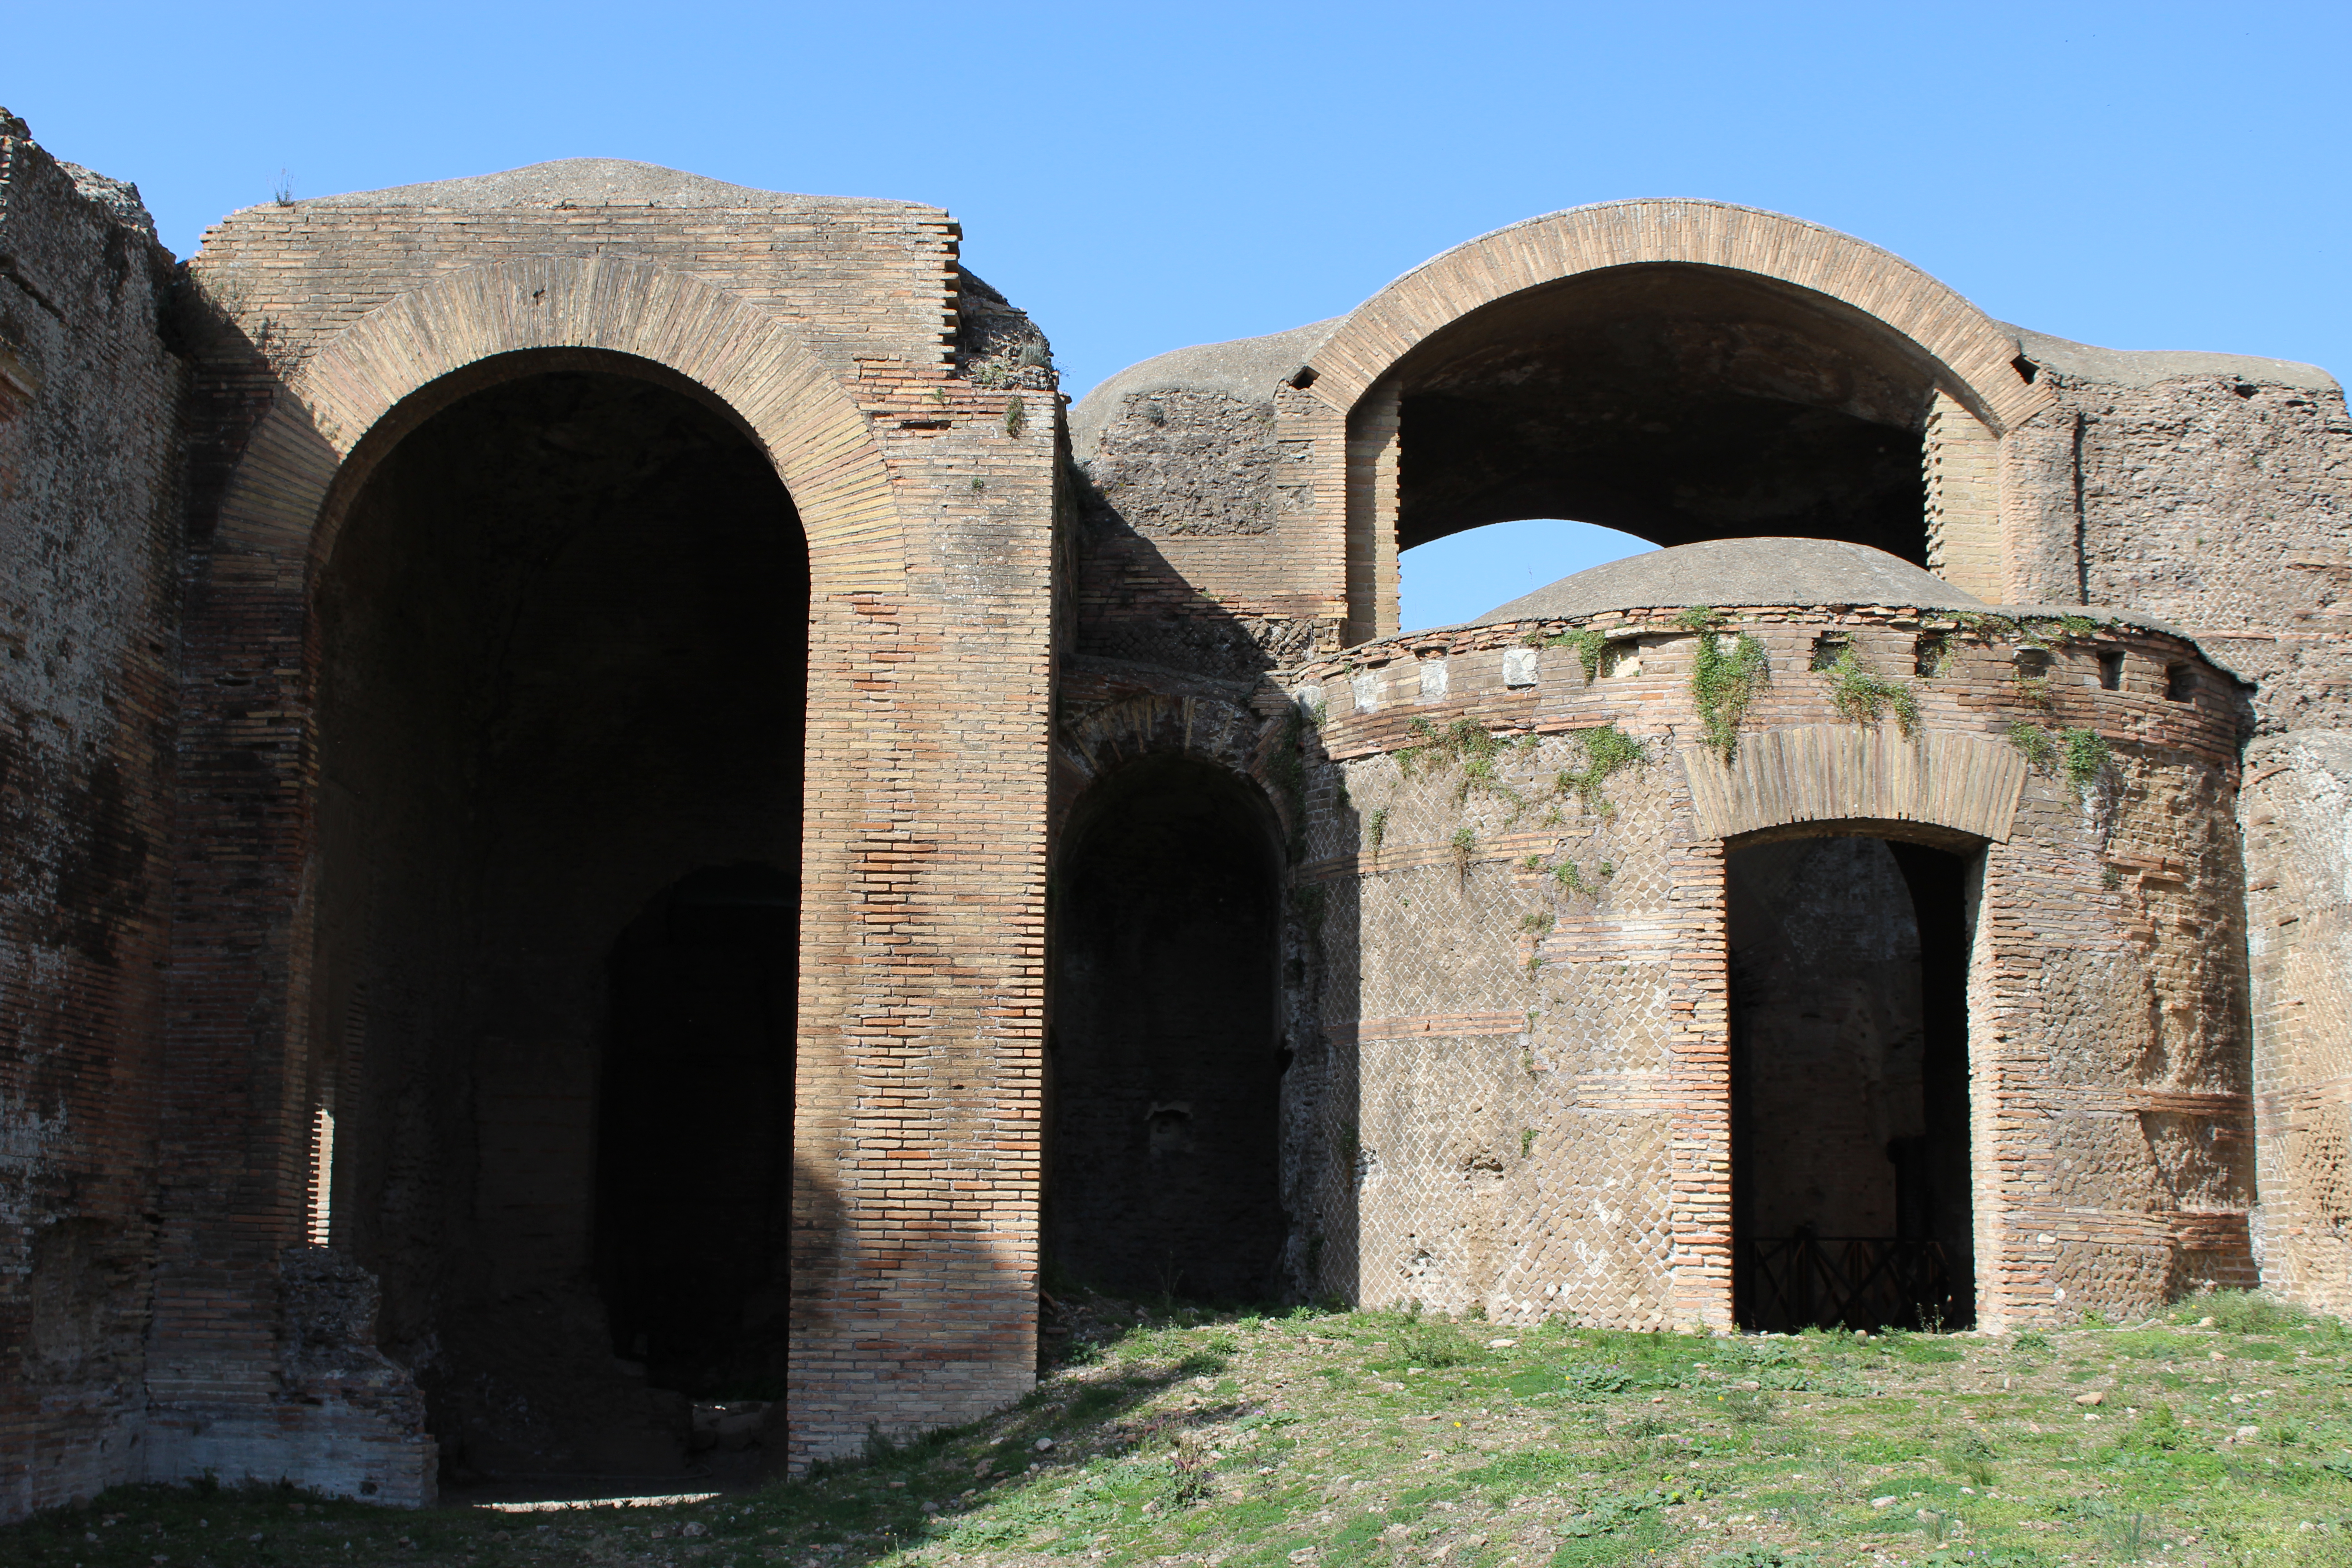 Ruins of ancient Roman baths